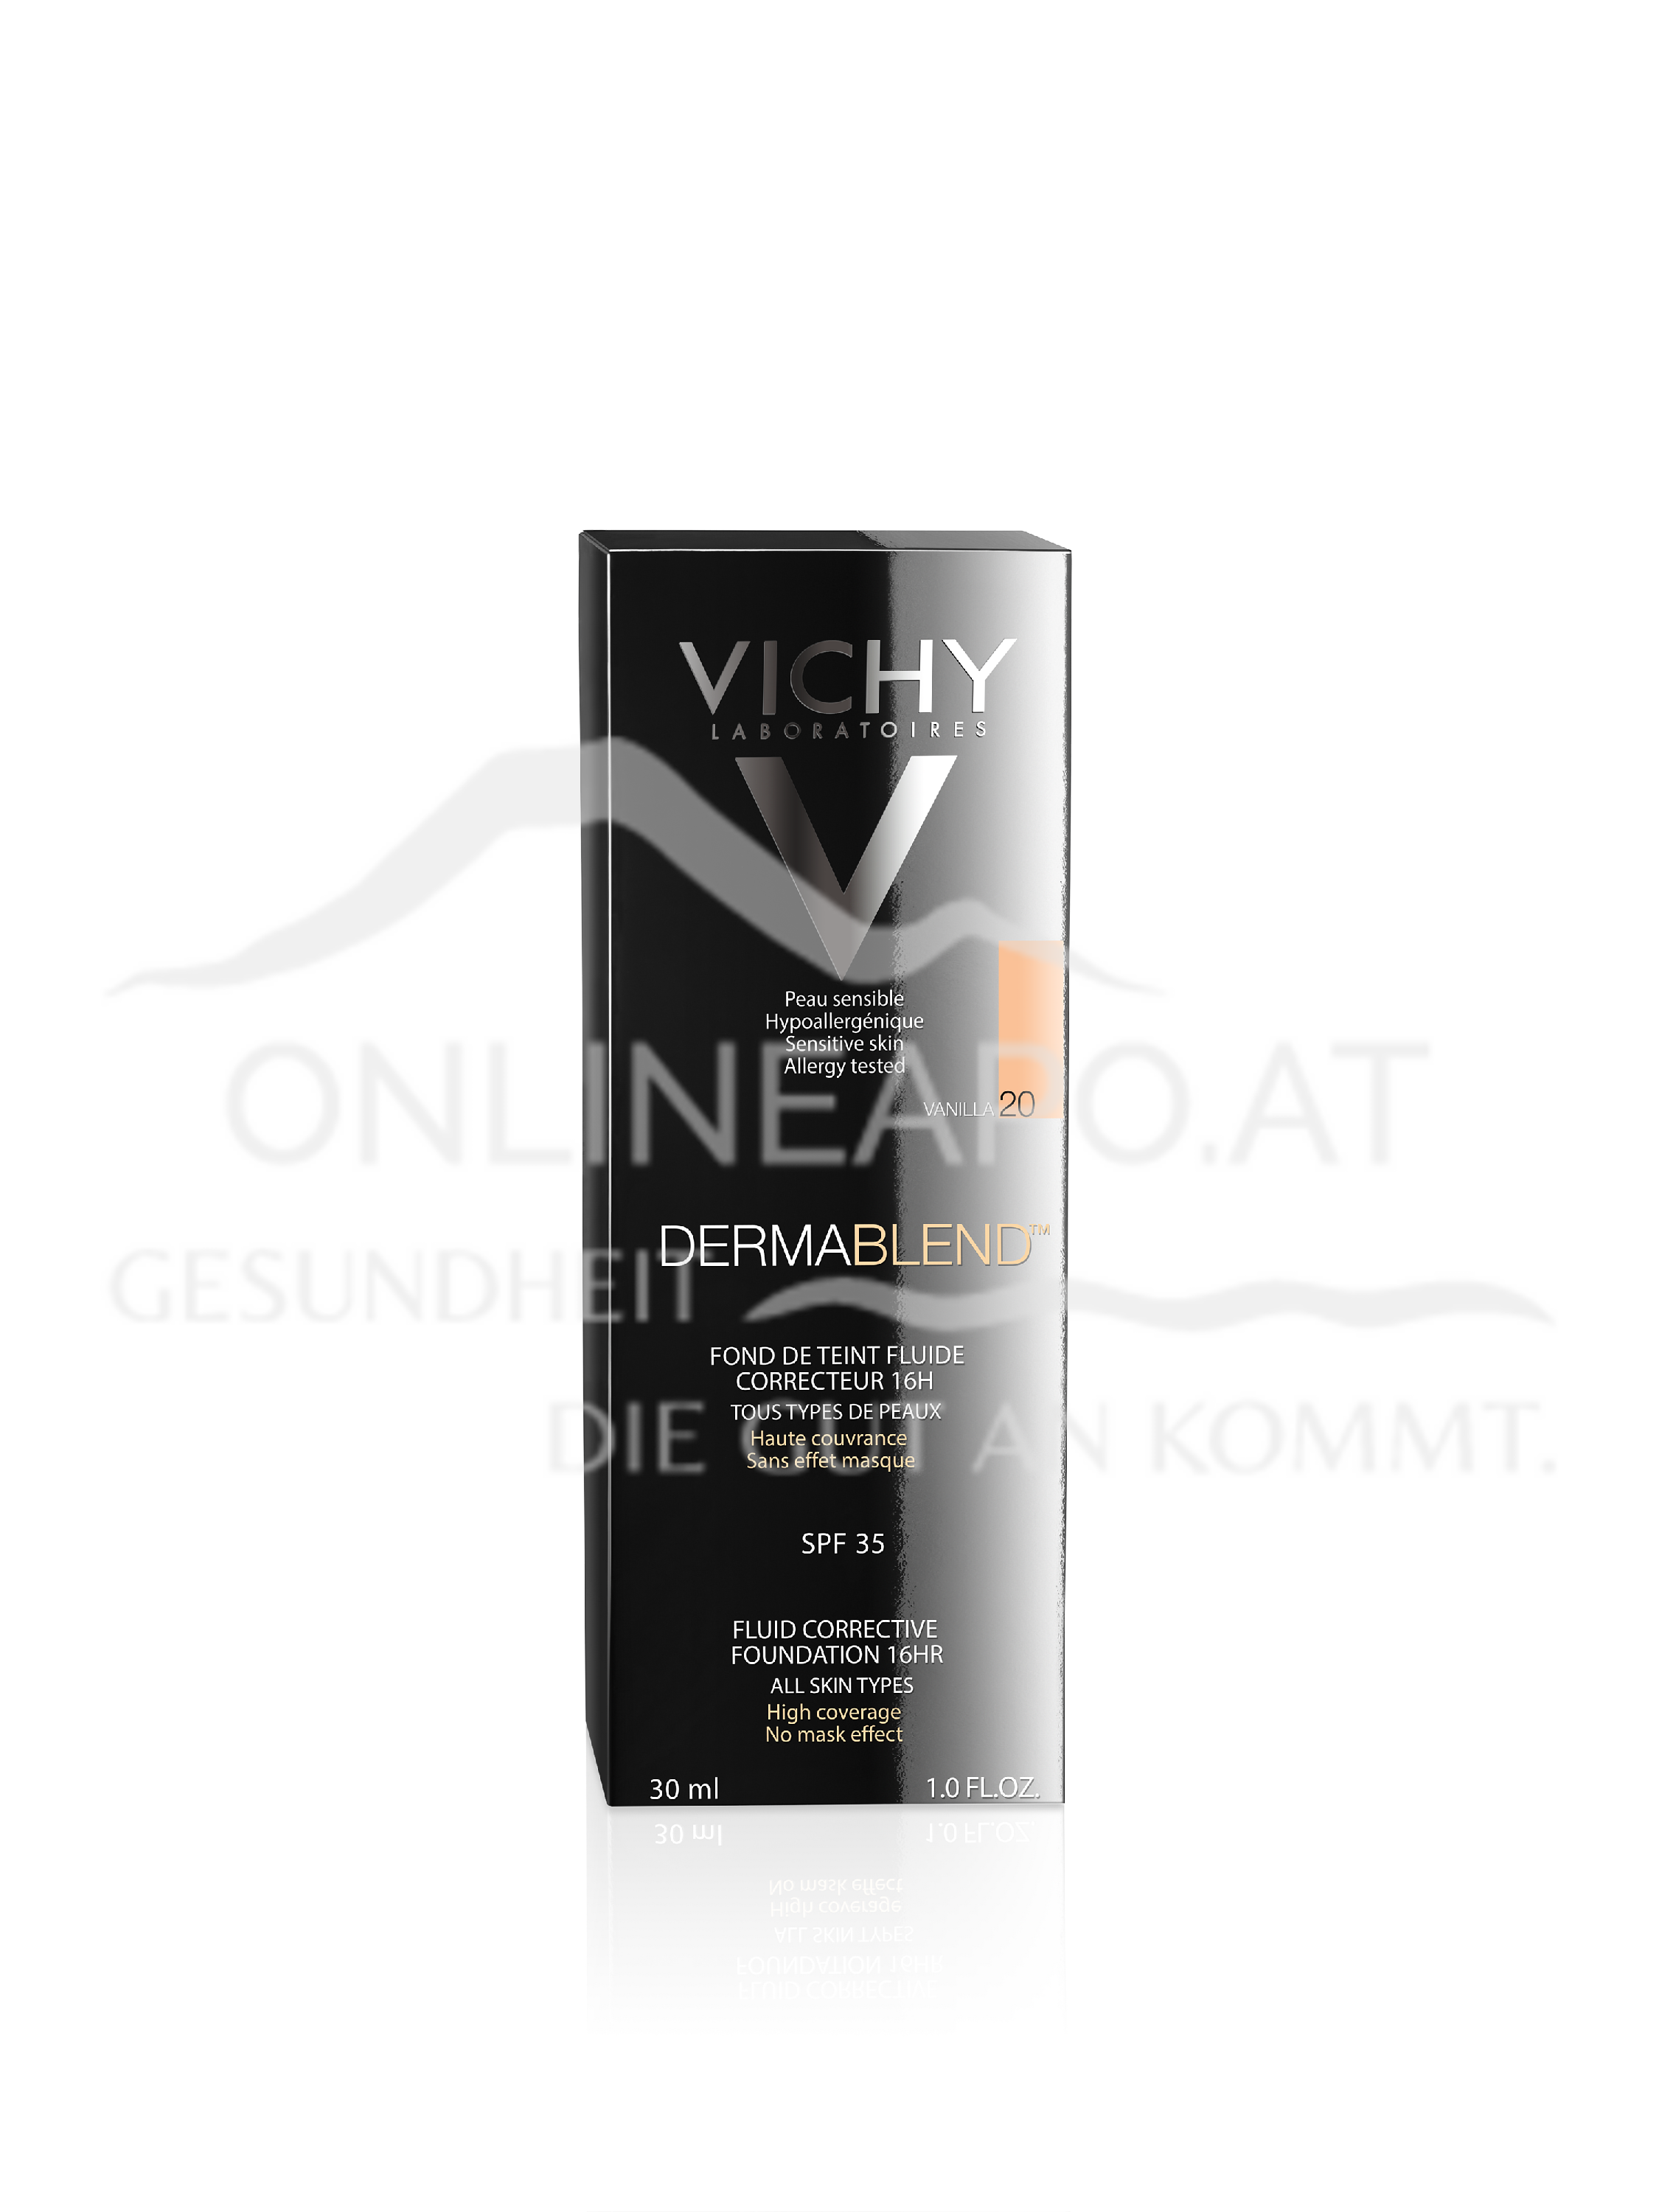 VICHY Dermablend Fluid 20 - Vanilla